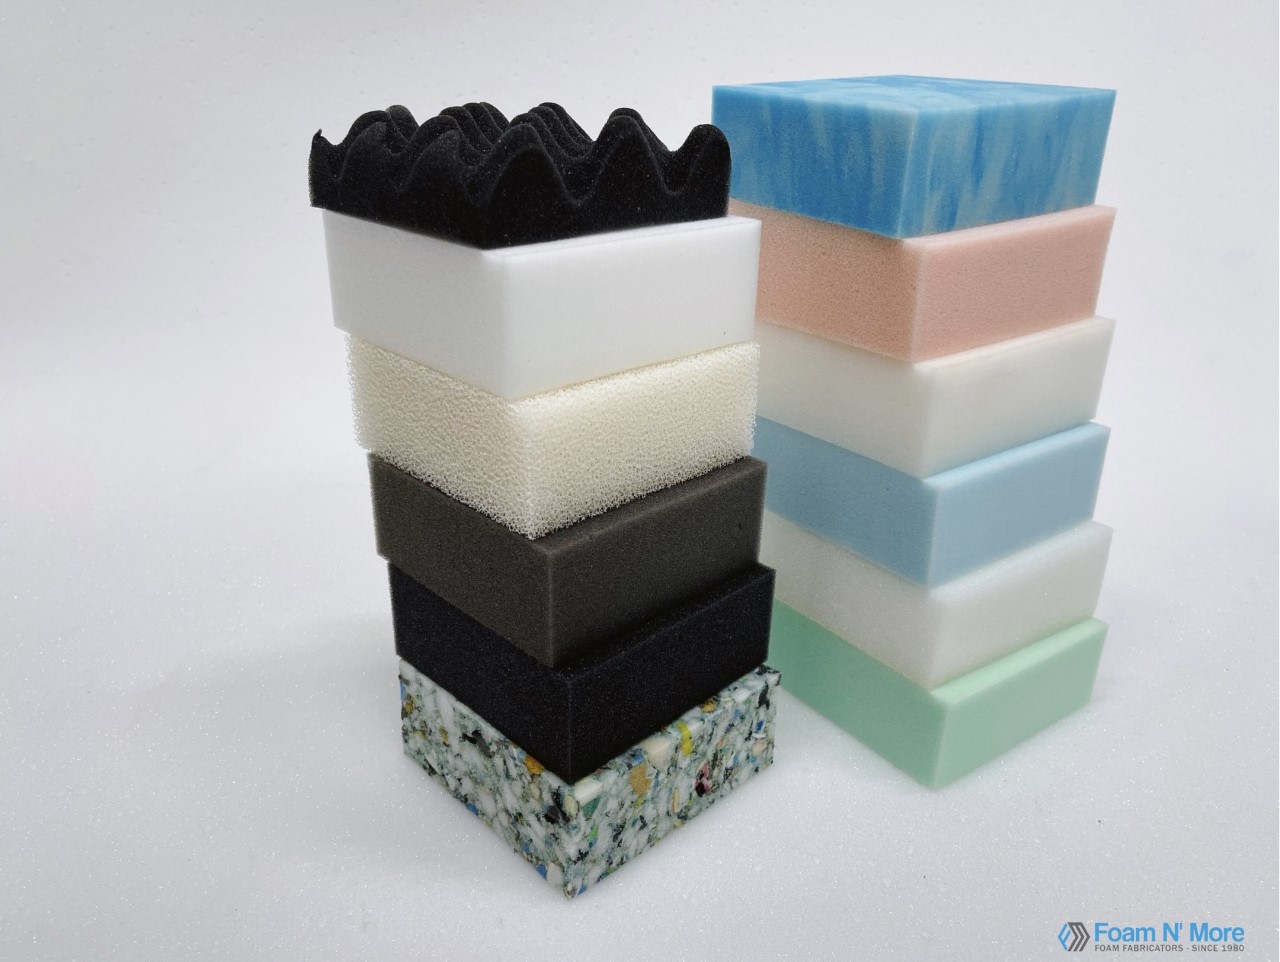 Sample foam Pack